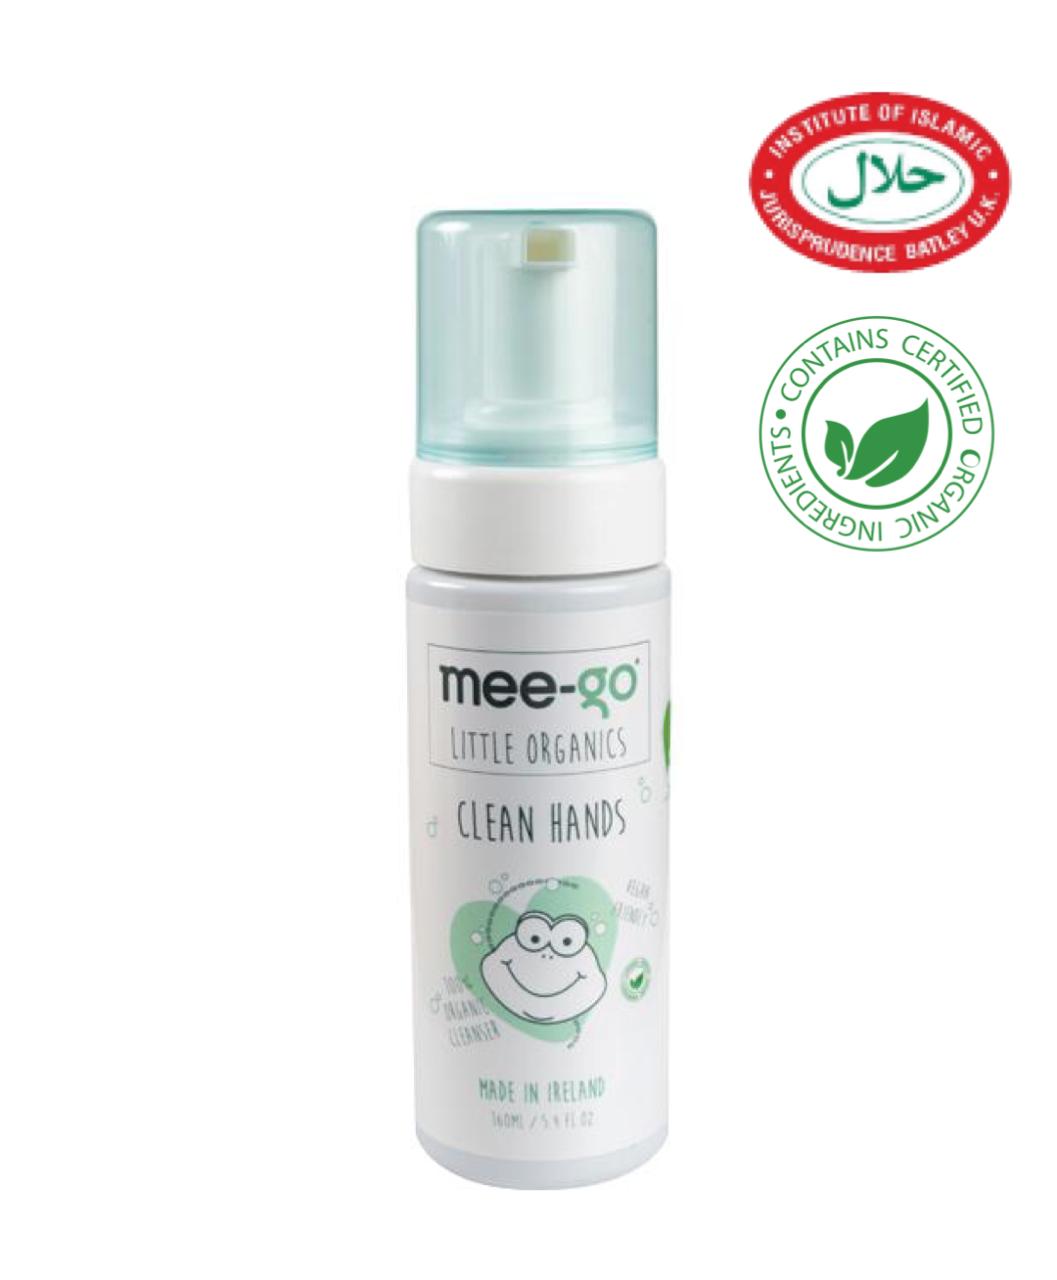 Mee-go Little Organics Halal Hair & Skincare Range